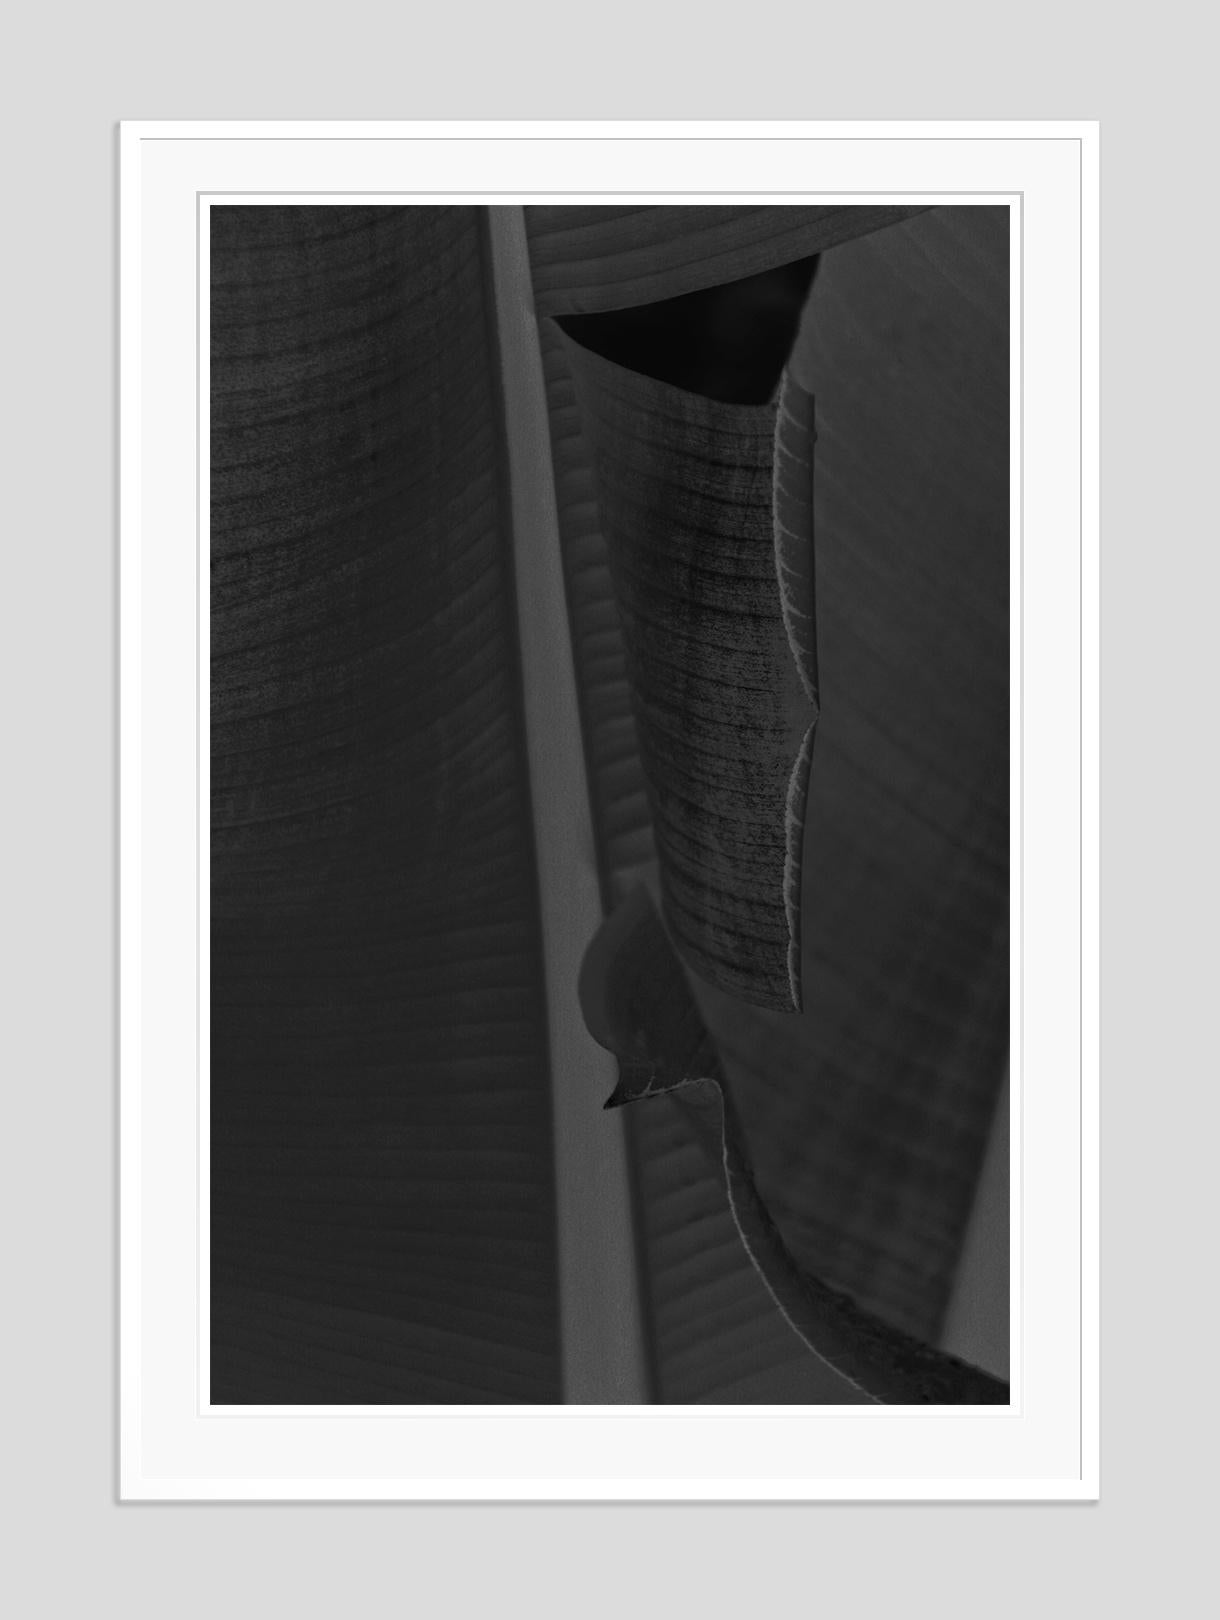 Black Leaf -  Oversize Signed Limited Edition Print  - Modern Photograph by Stuart Möller